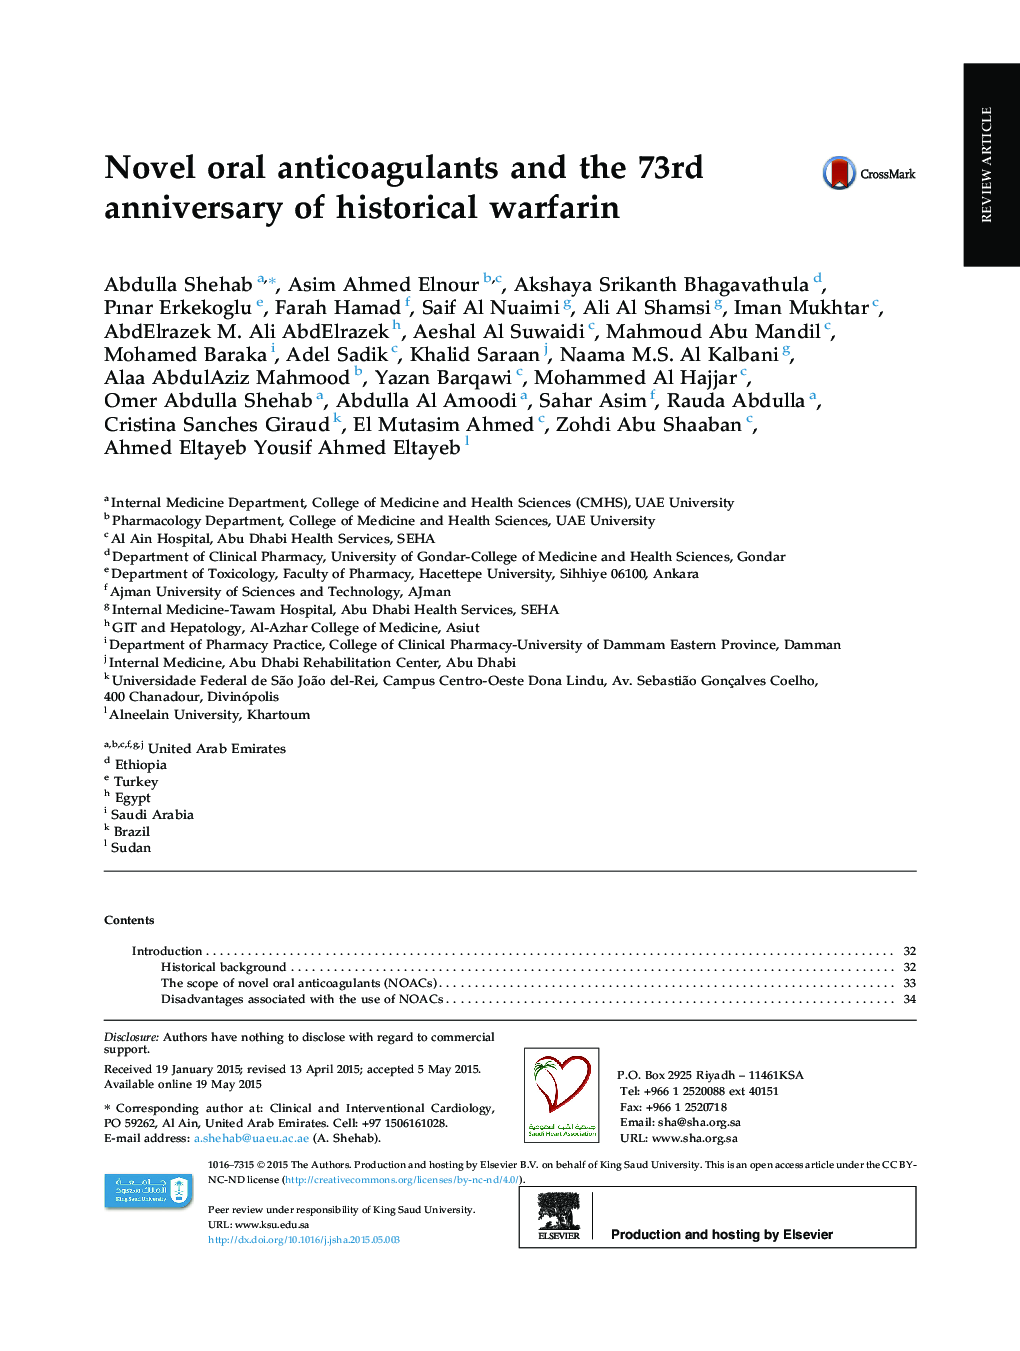 Novel oral anticoagulants and the 73rd anniversary of historical warfarin